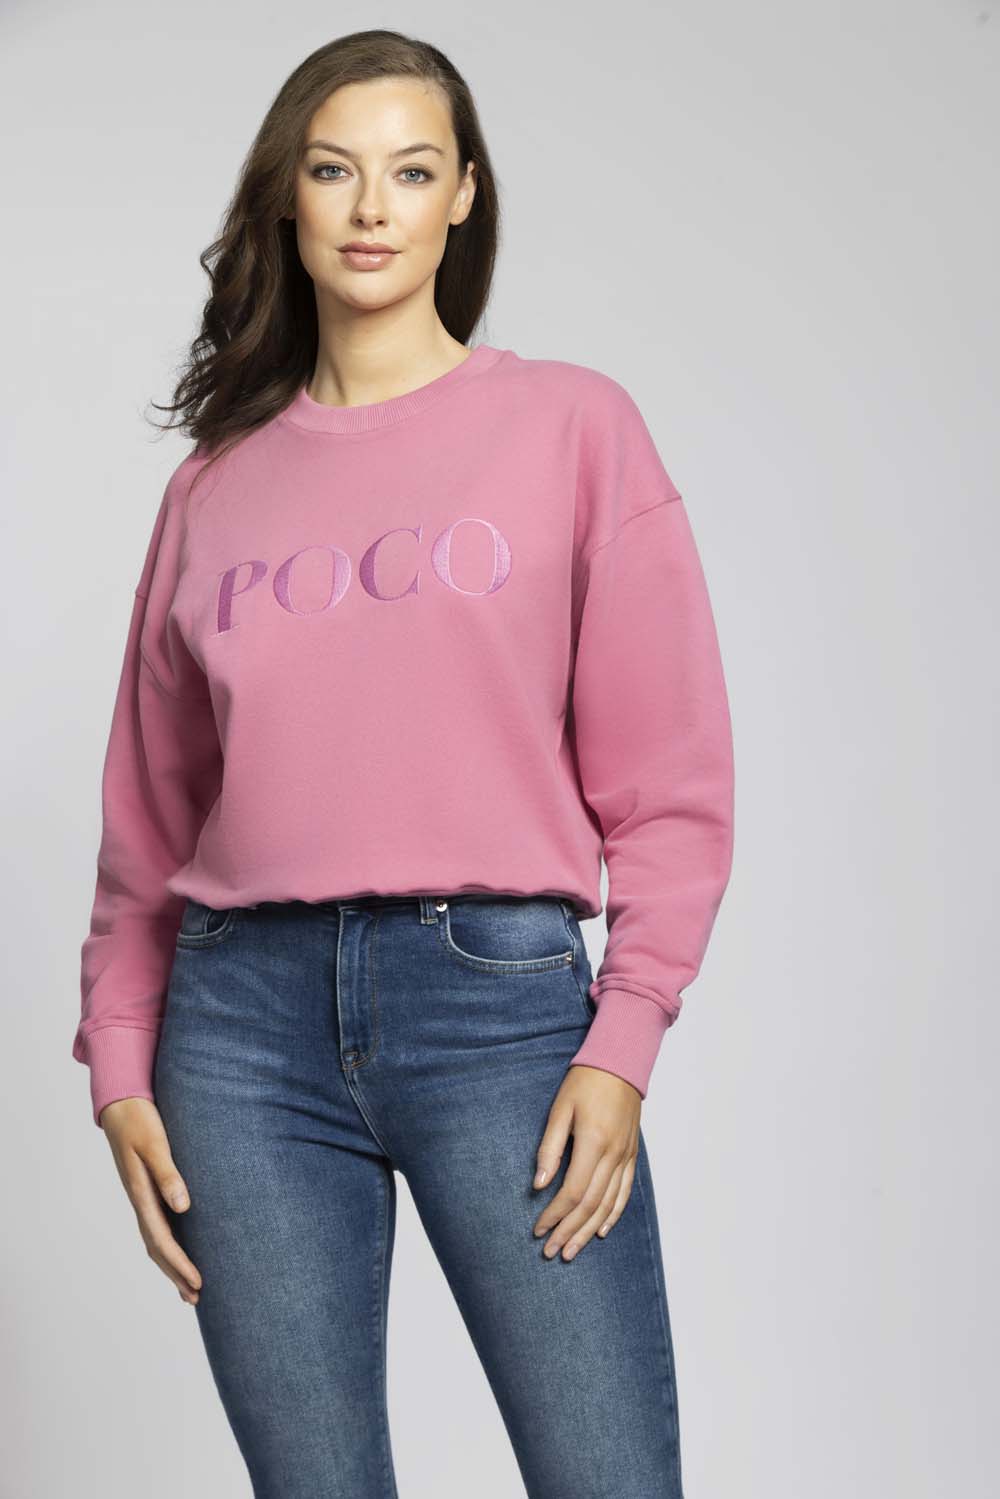 Poco Embroidery Sweatshirt Pink